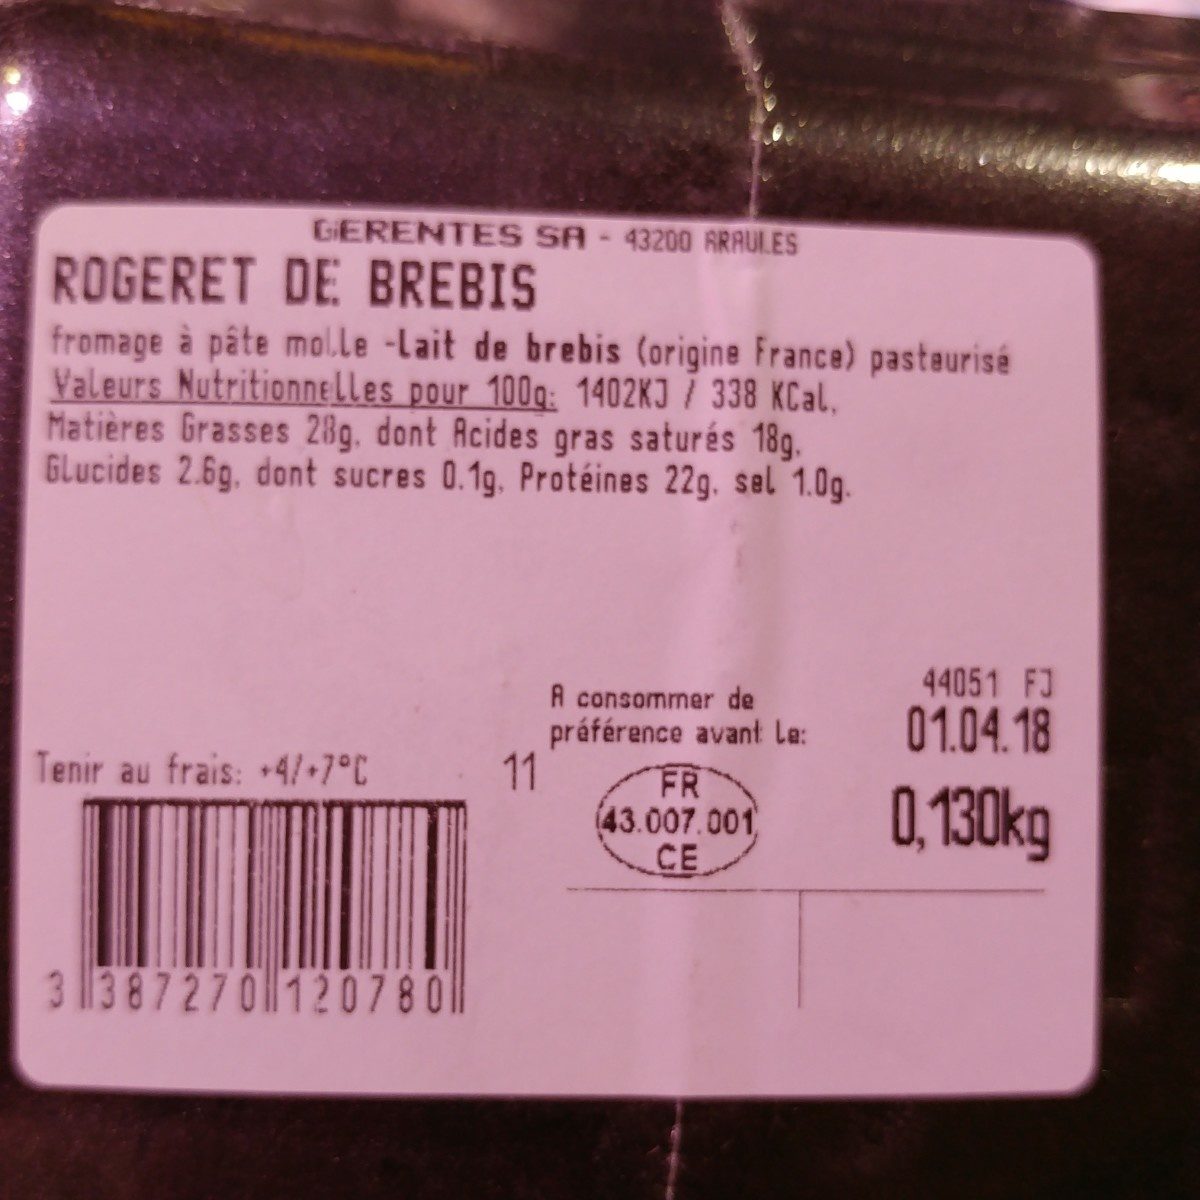 Rogeret de brebis - Ingredienti - fr